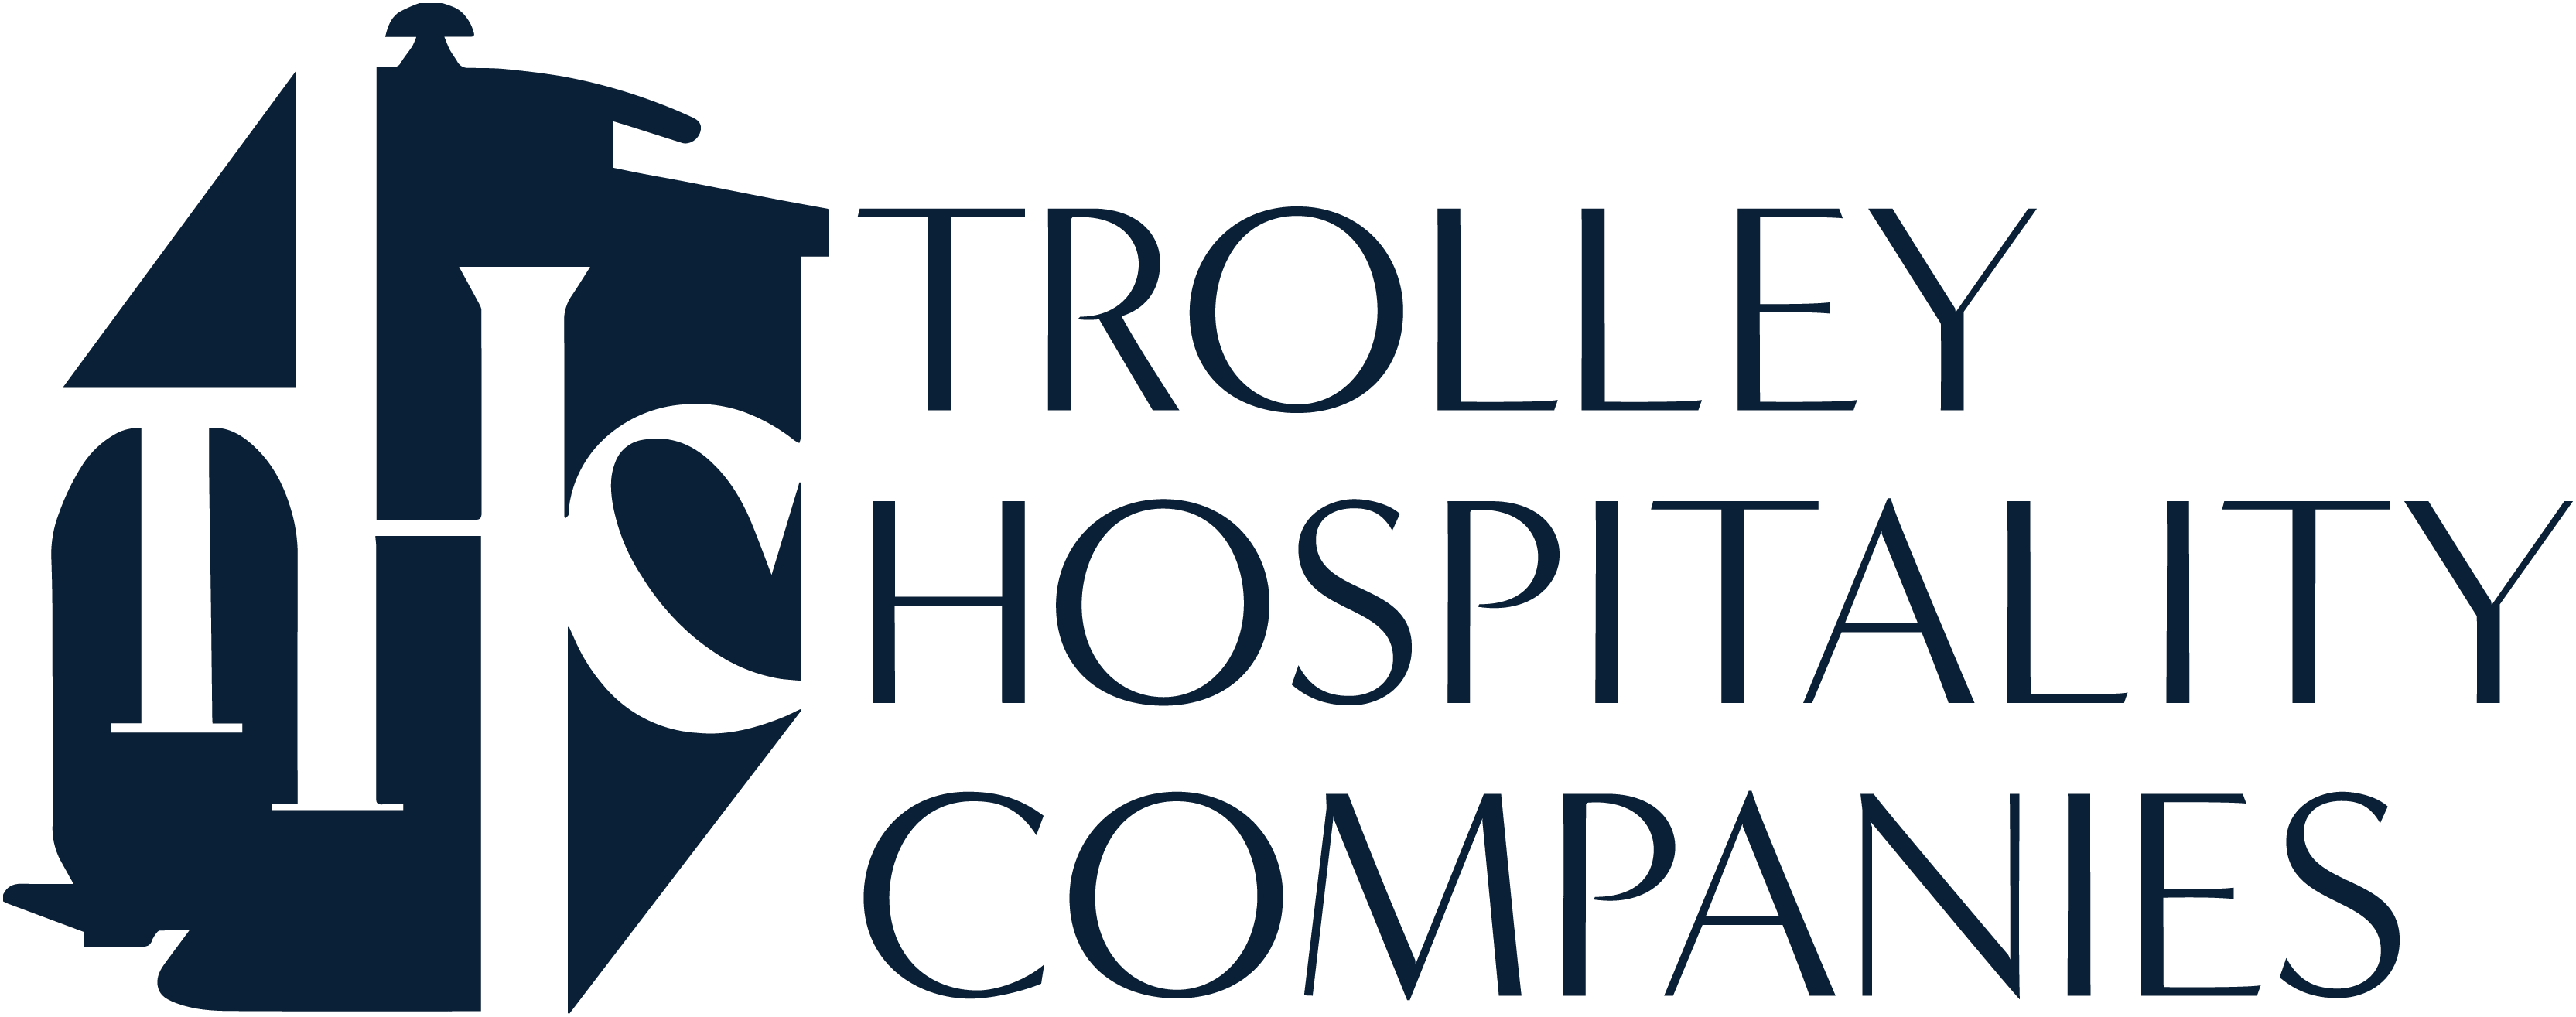 Trolley Hospitality Companies logo